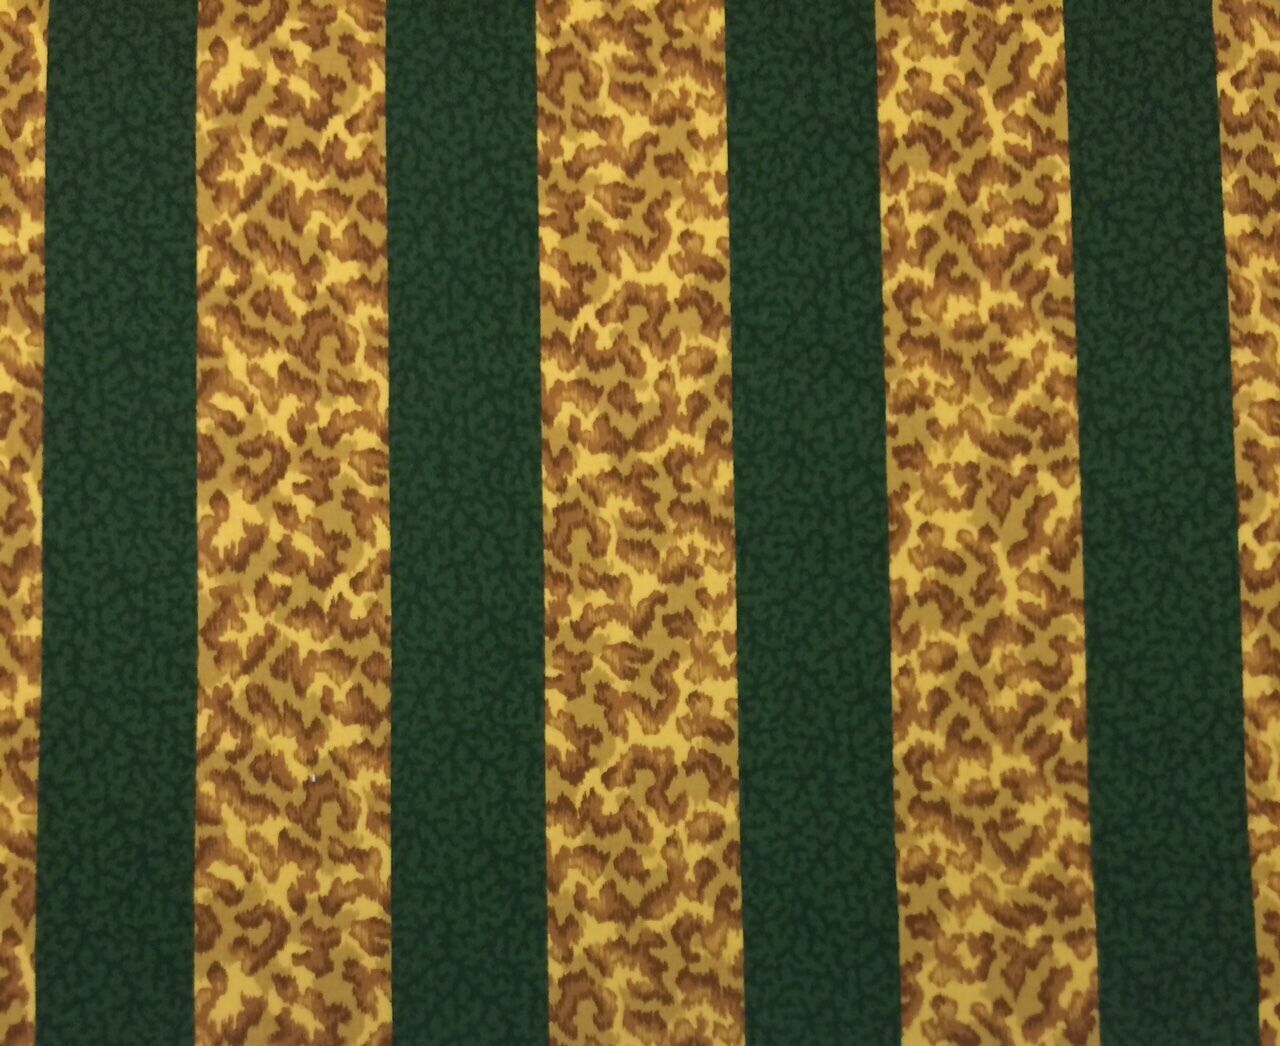 CONCORD FABRICS KAUAI JUNGLE GREEN LEOPARD CHEETAH CORAL STRIPE BY THE YARD 54"W - $8.79